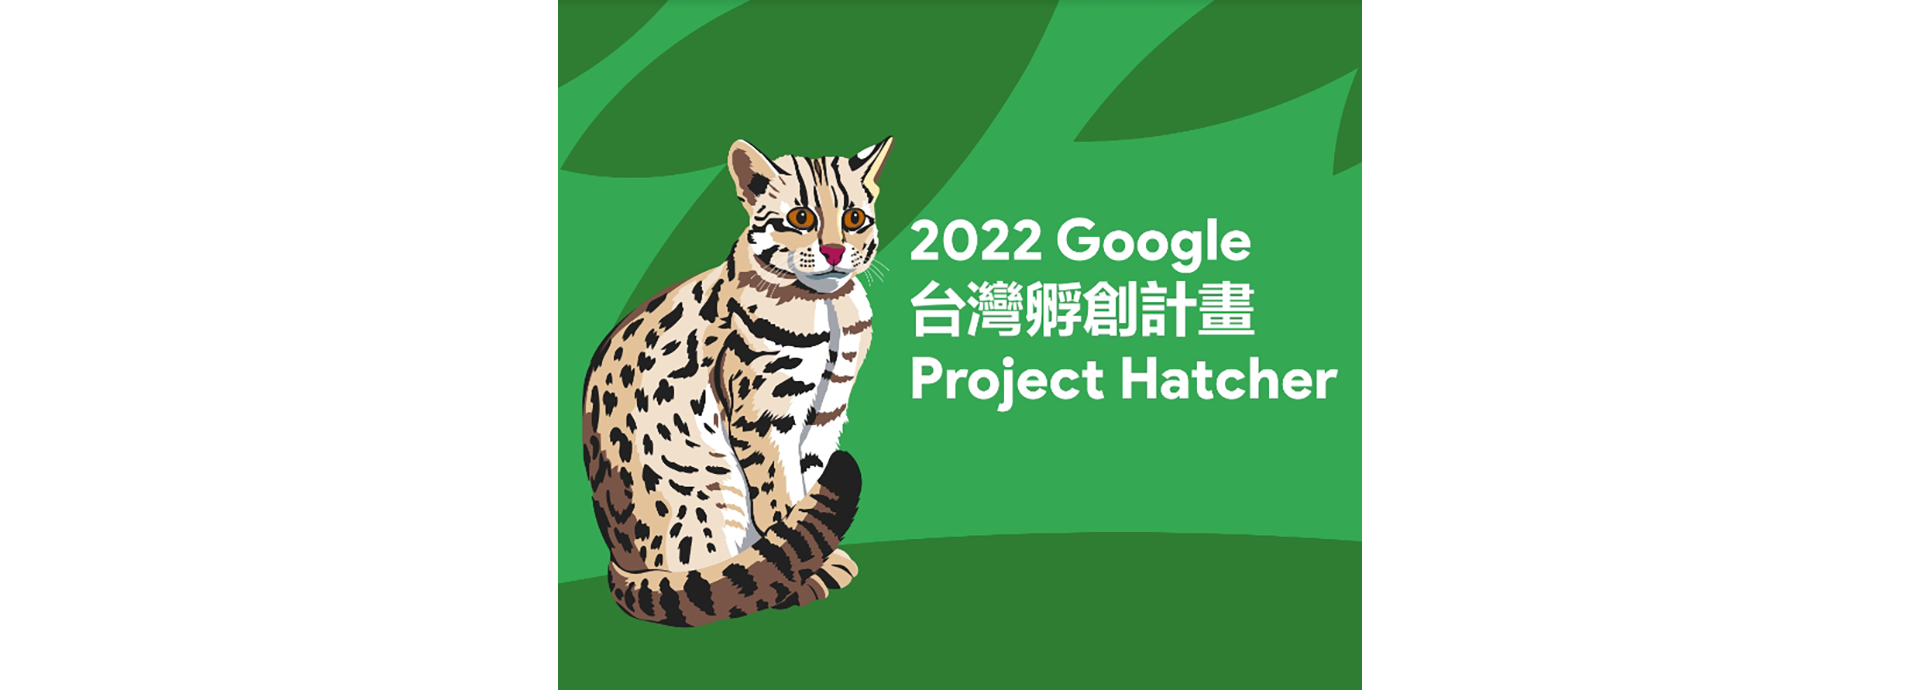 【歡迎報名】Google Project Hatcher 2022